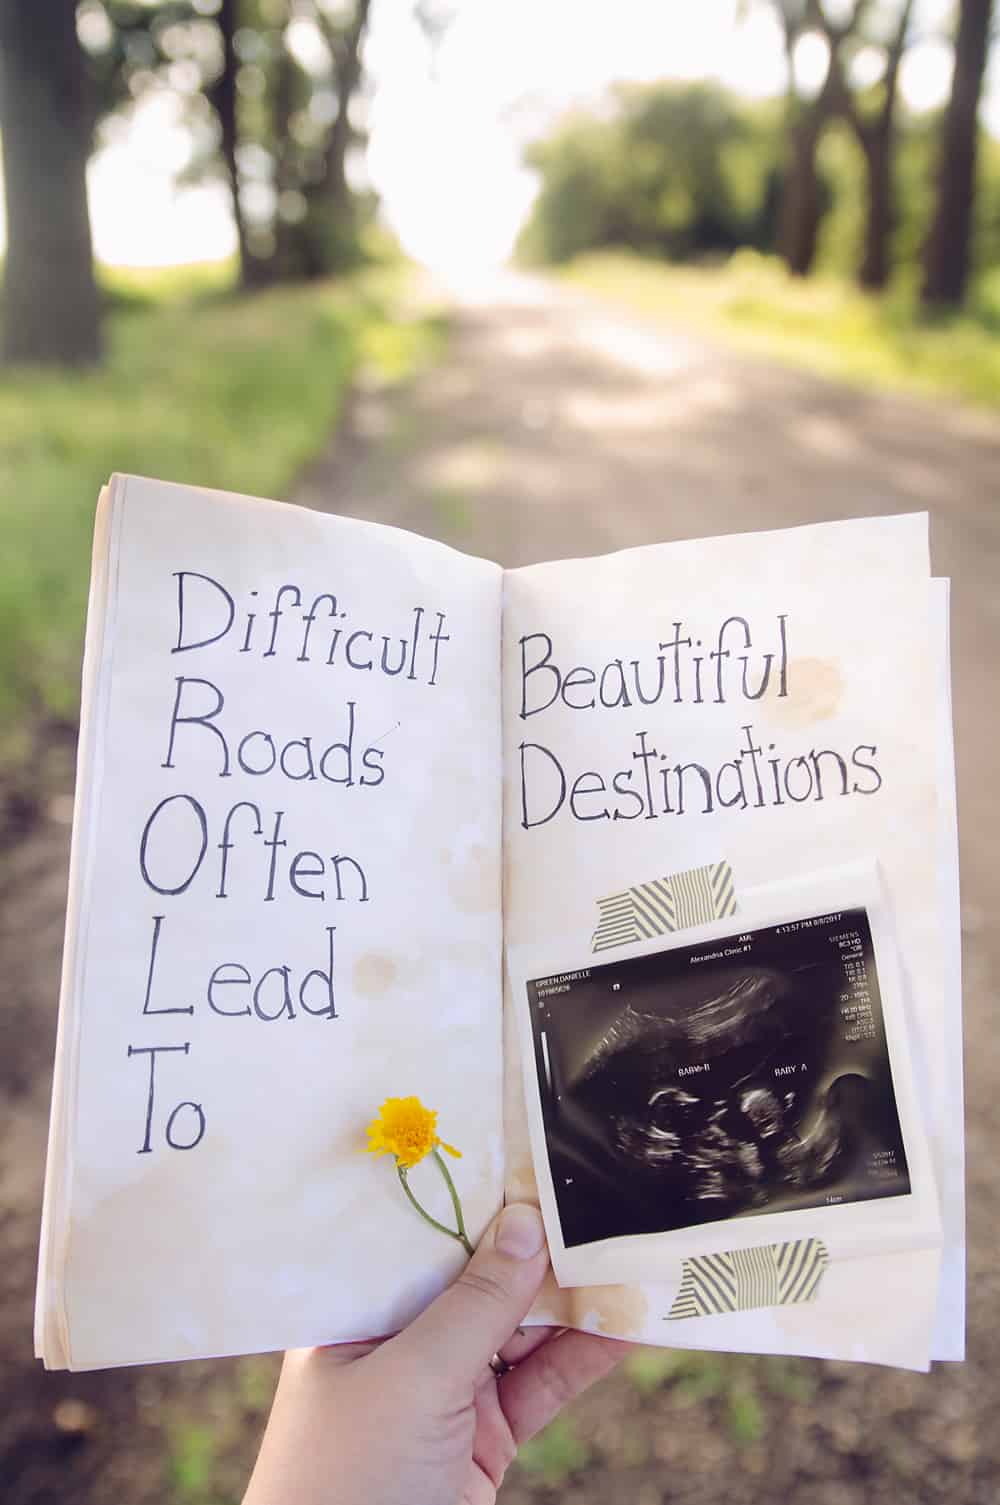 Difficult Roads Often Lead to Beautiful Destinations IVF Infertility Pregnancy Announcment